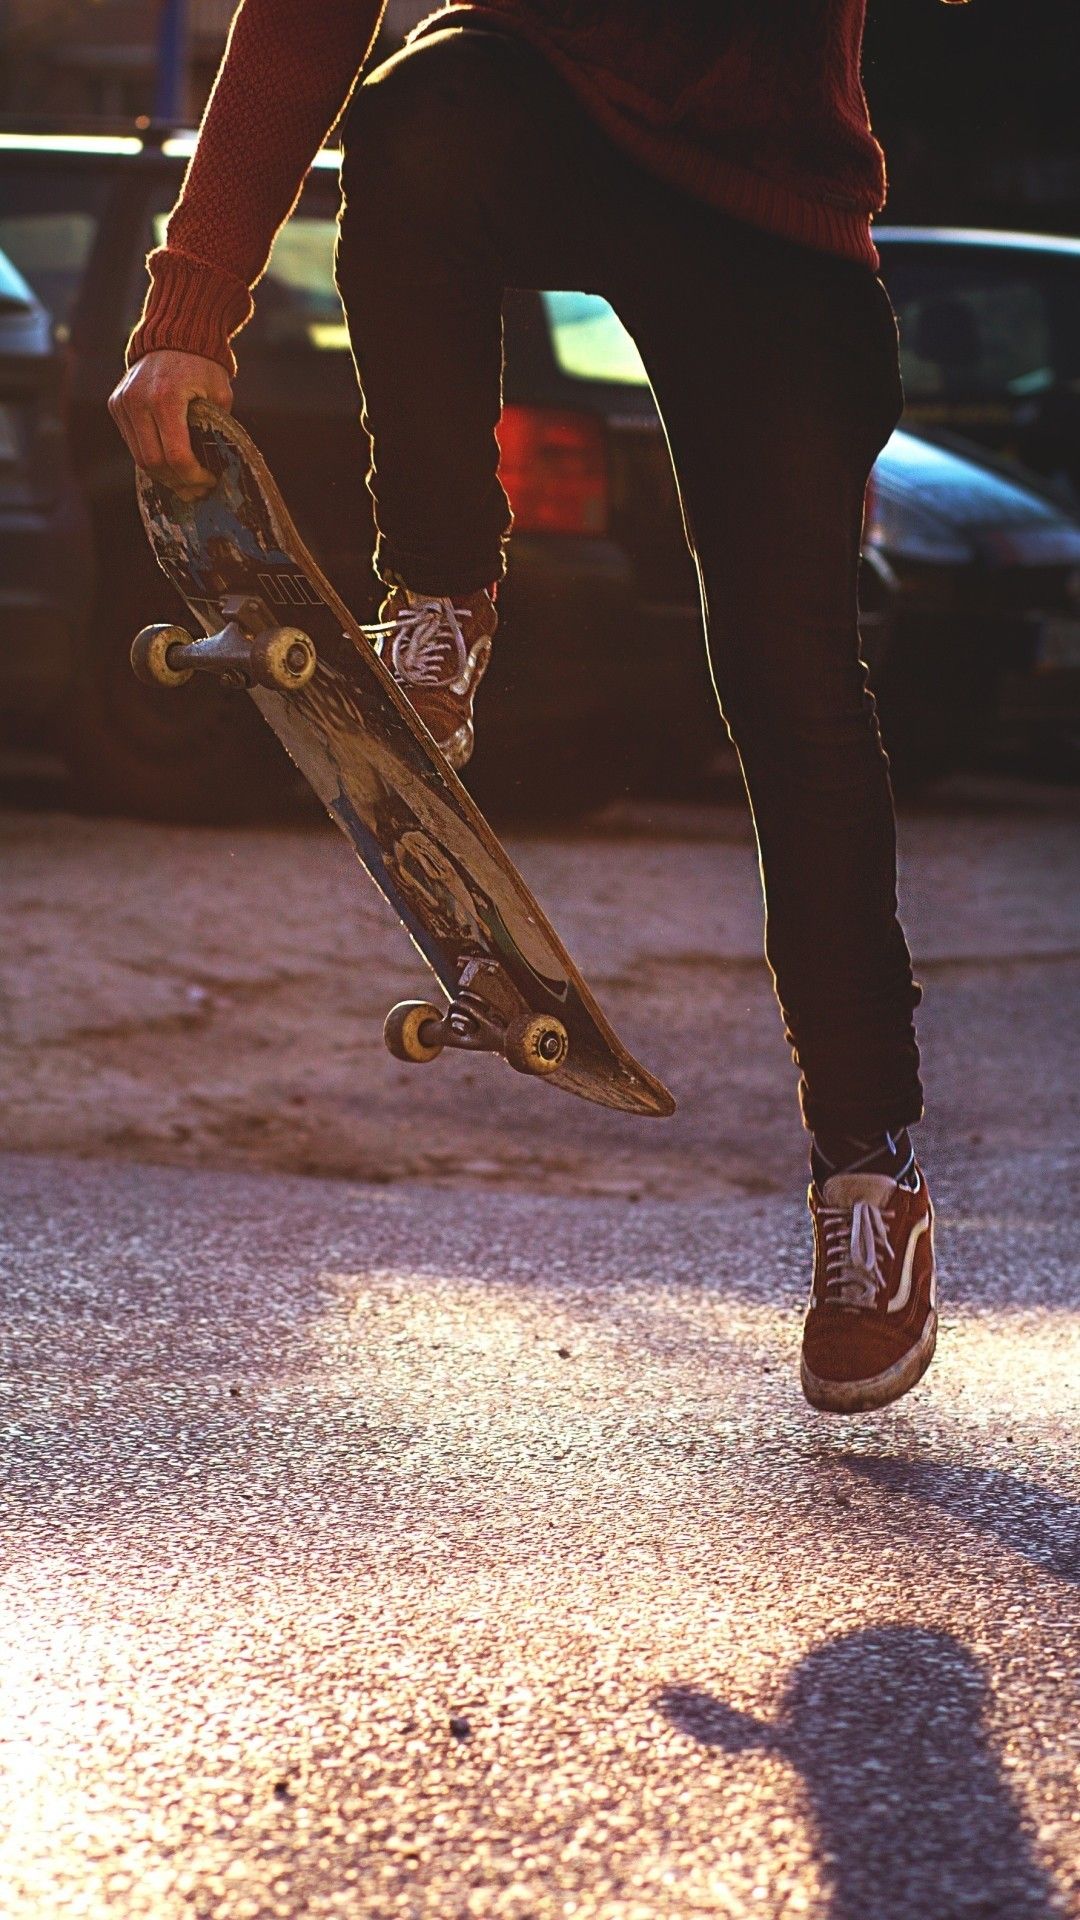 Wallpaper of Skateboard